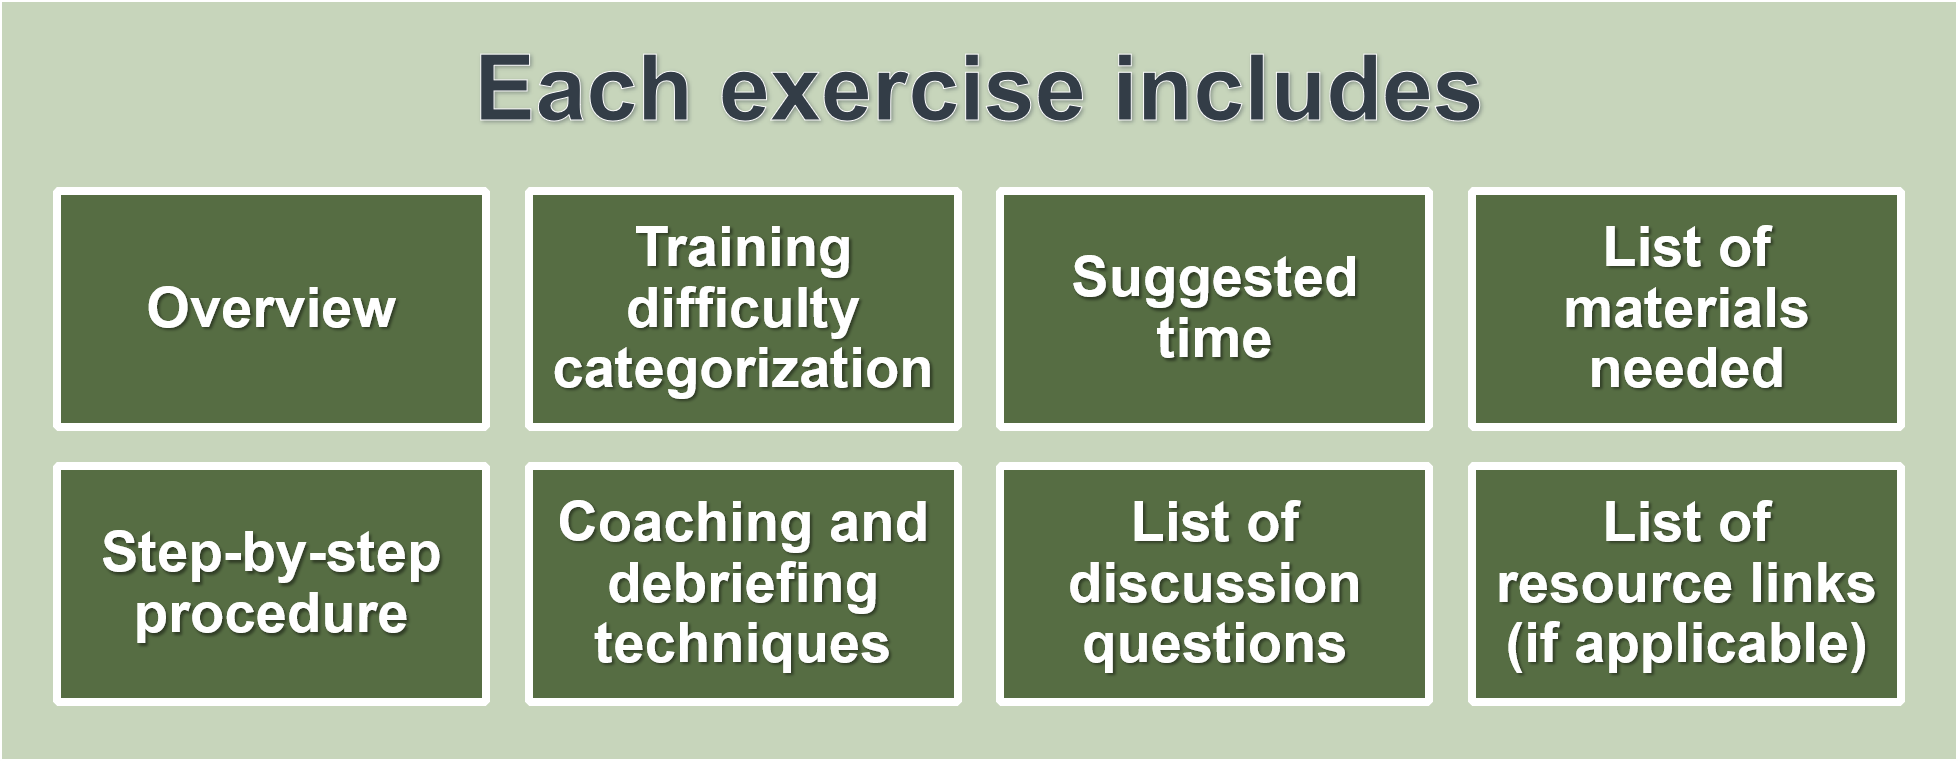 Each exercise includes list